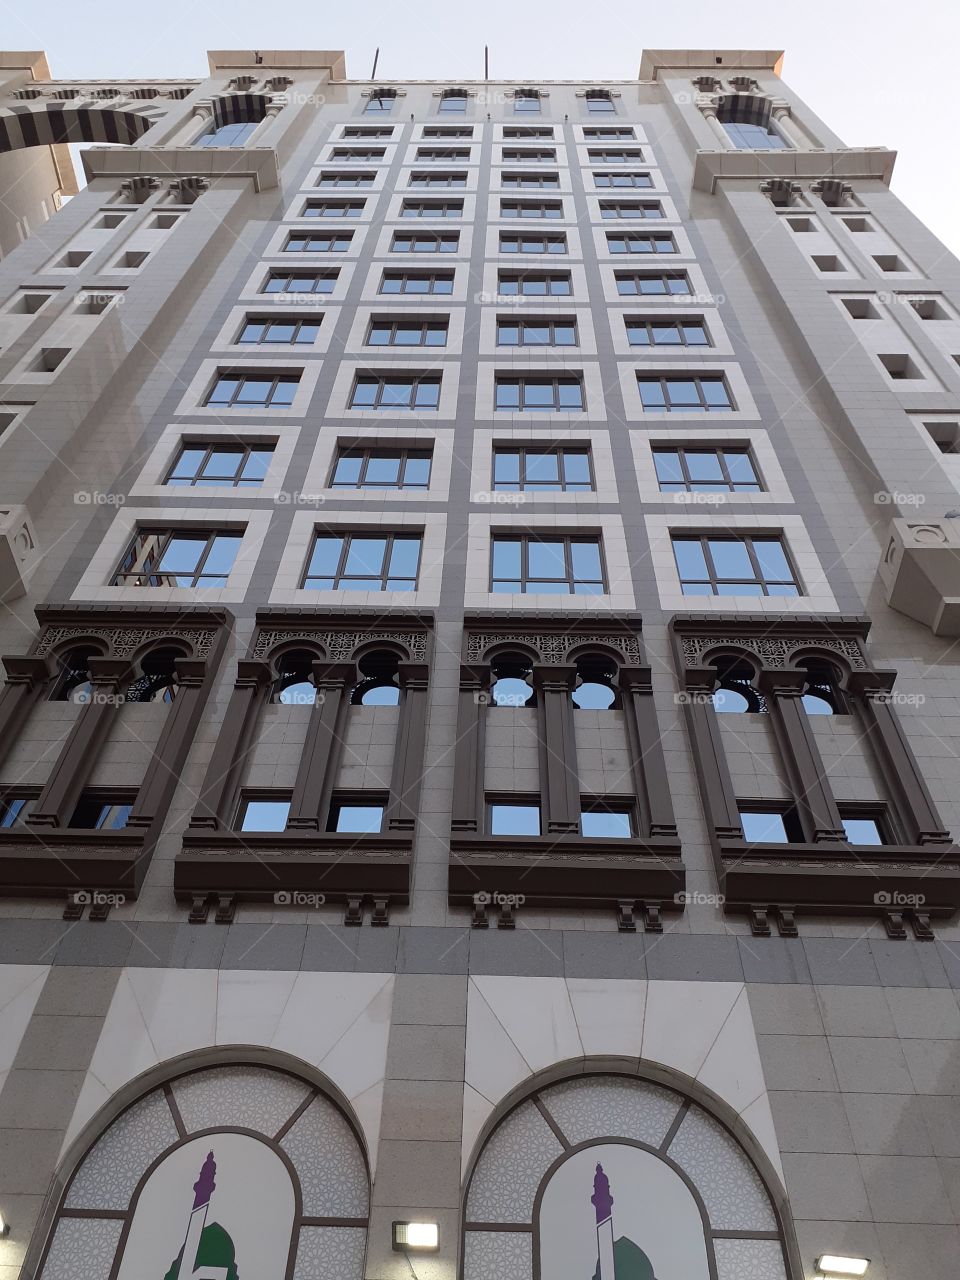 mekkah madina nearby building saudi captured on iphone